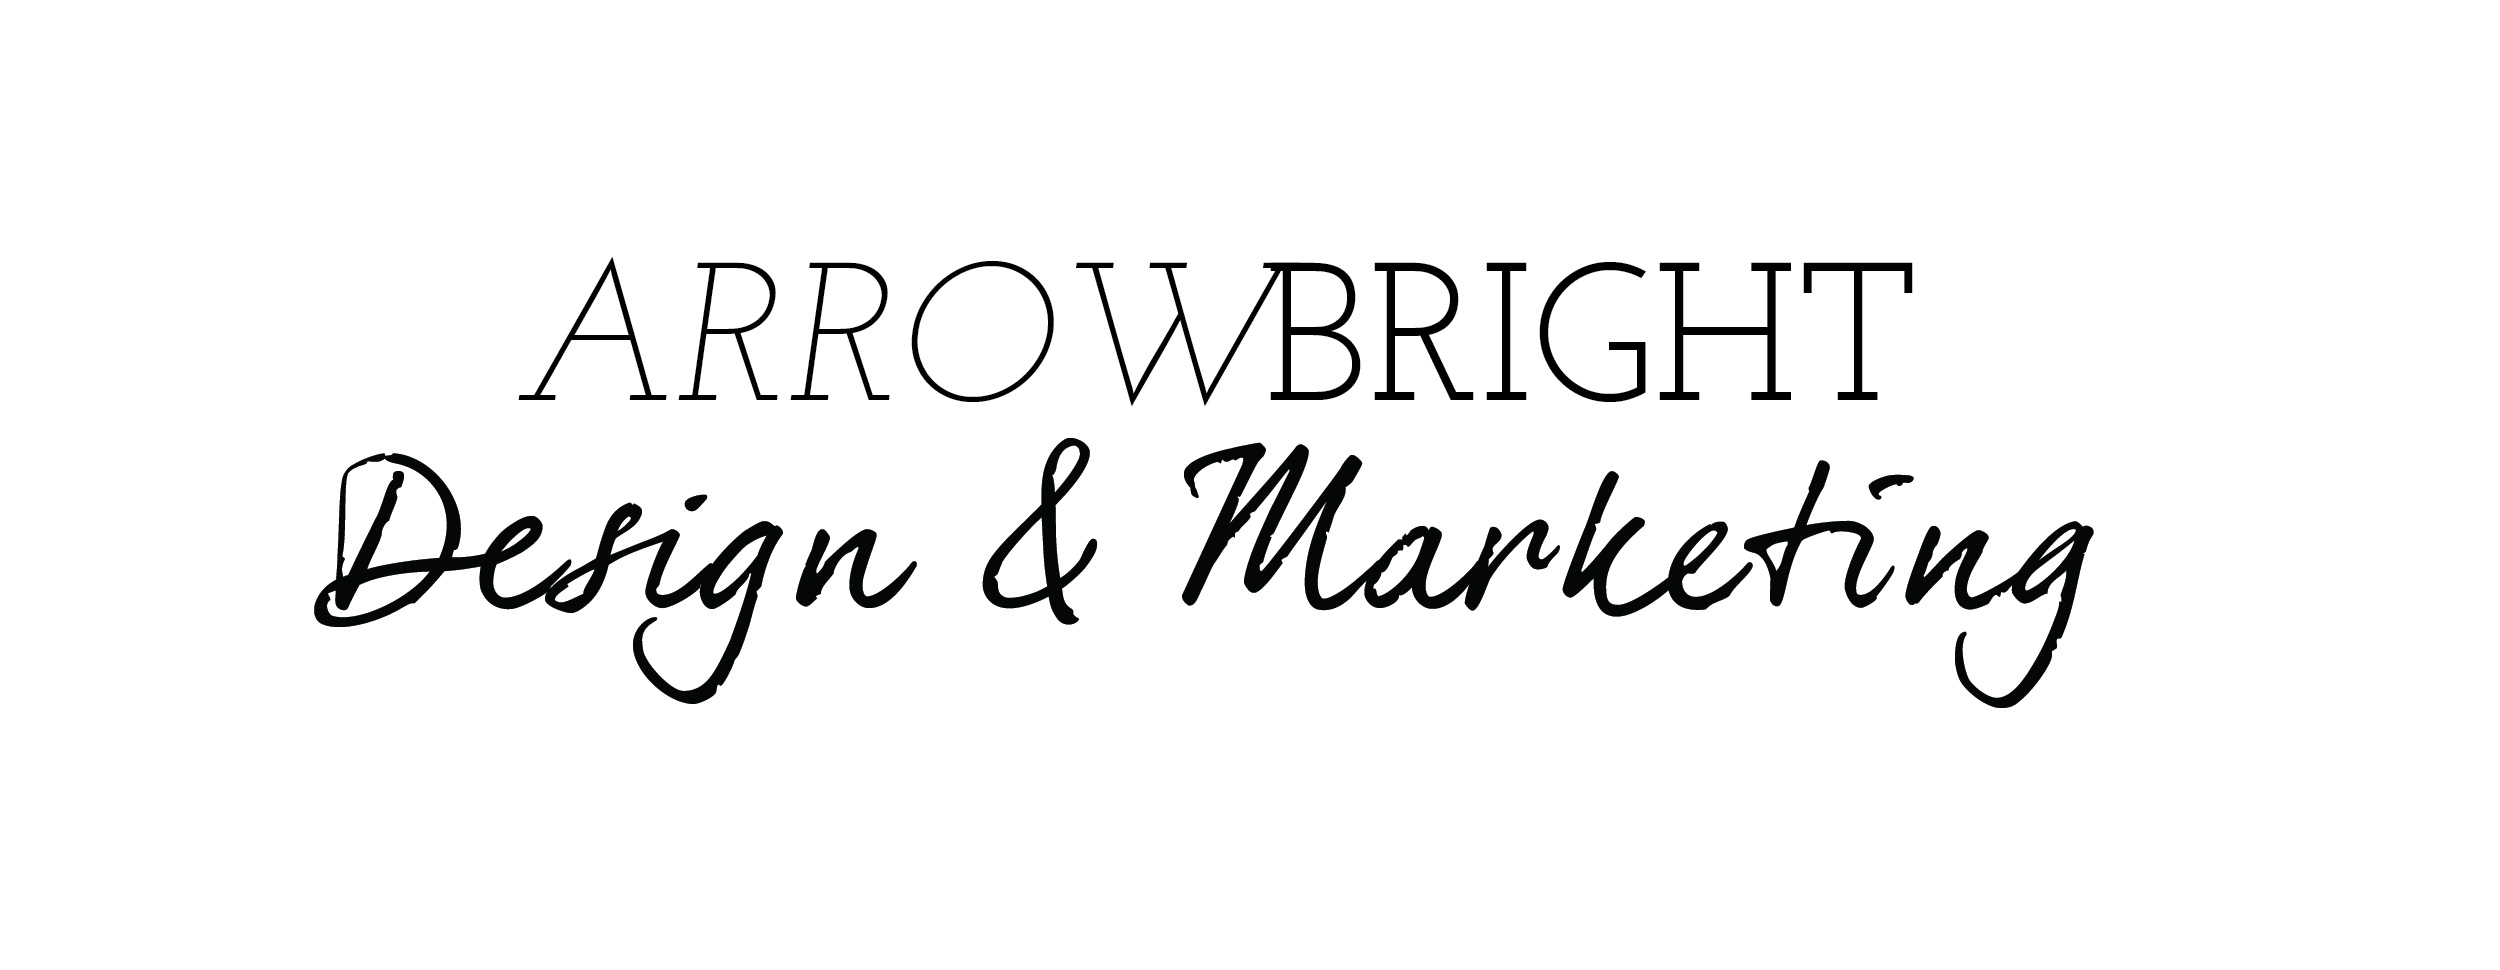 Arrow Bright Design and Marketing